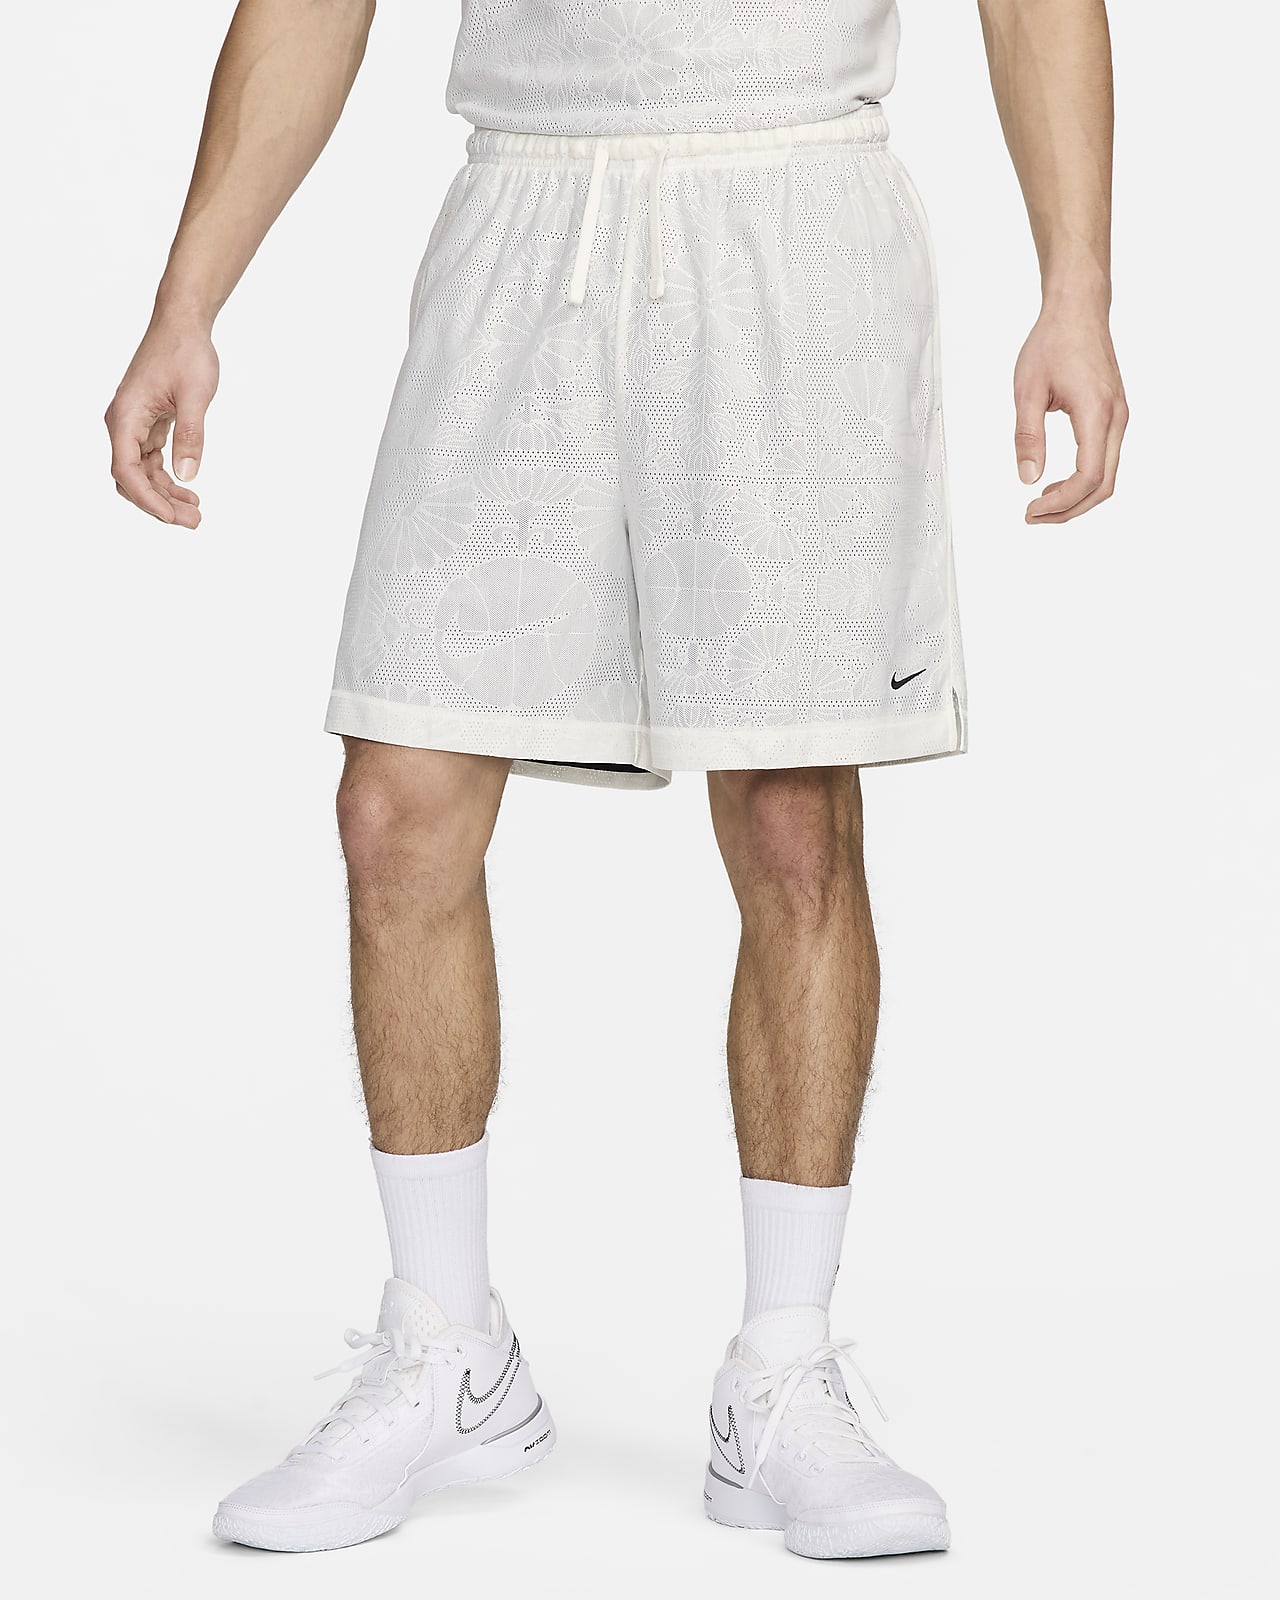 Nike Standard Issue Men's 6" Dri-FIT Reversible Basketball Shorts